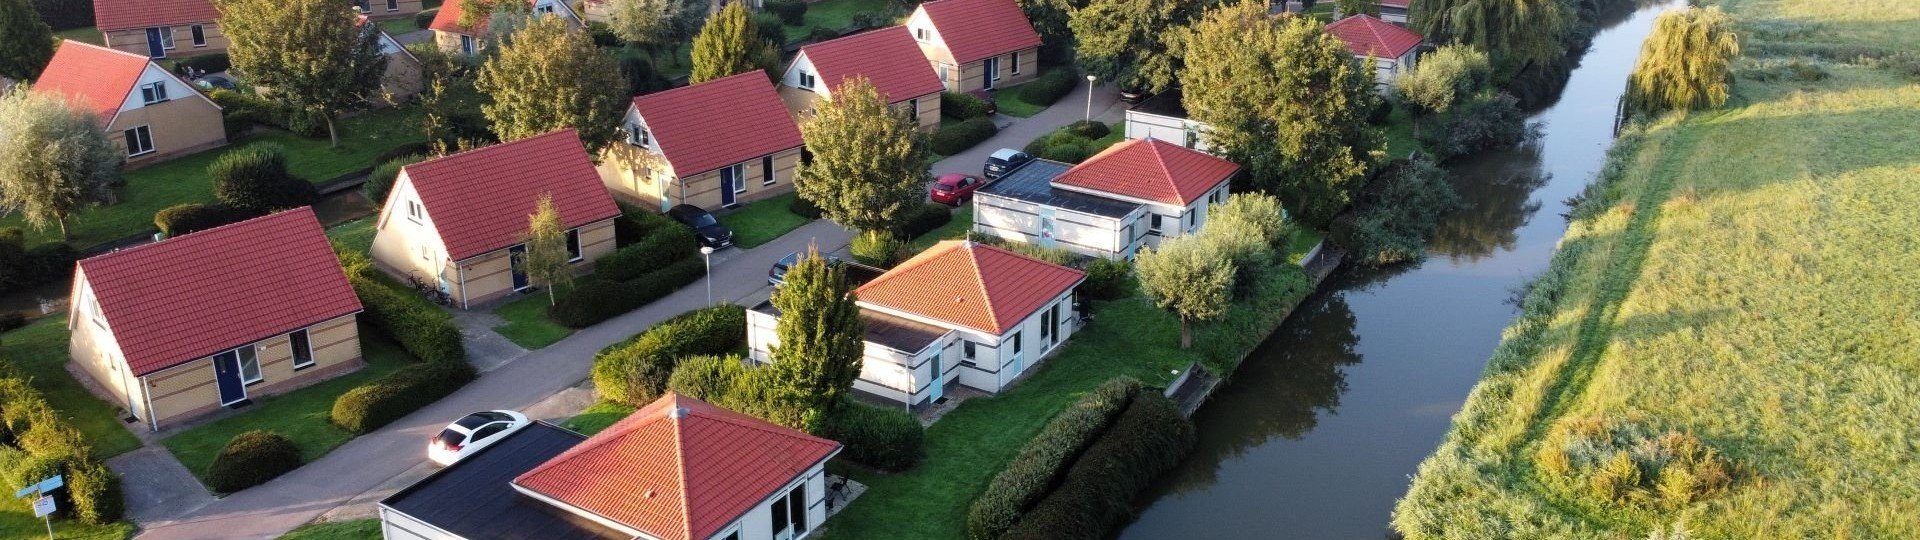 Luchtfoto ijsselhof bungalows